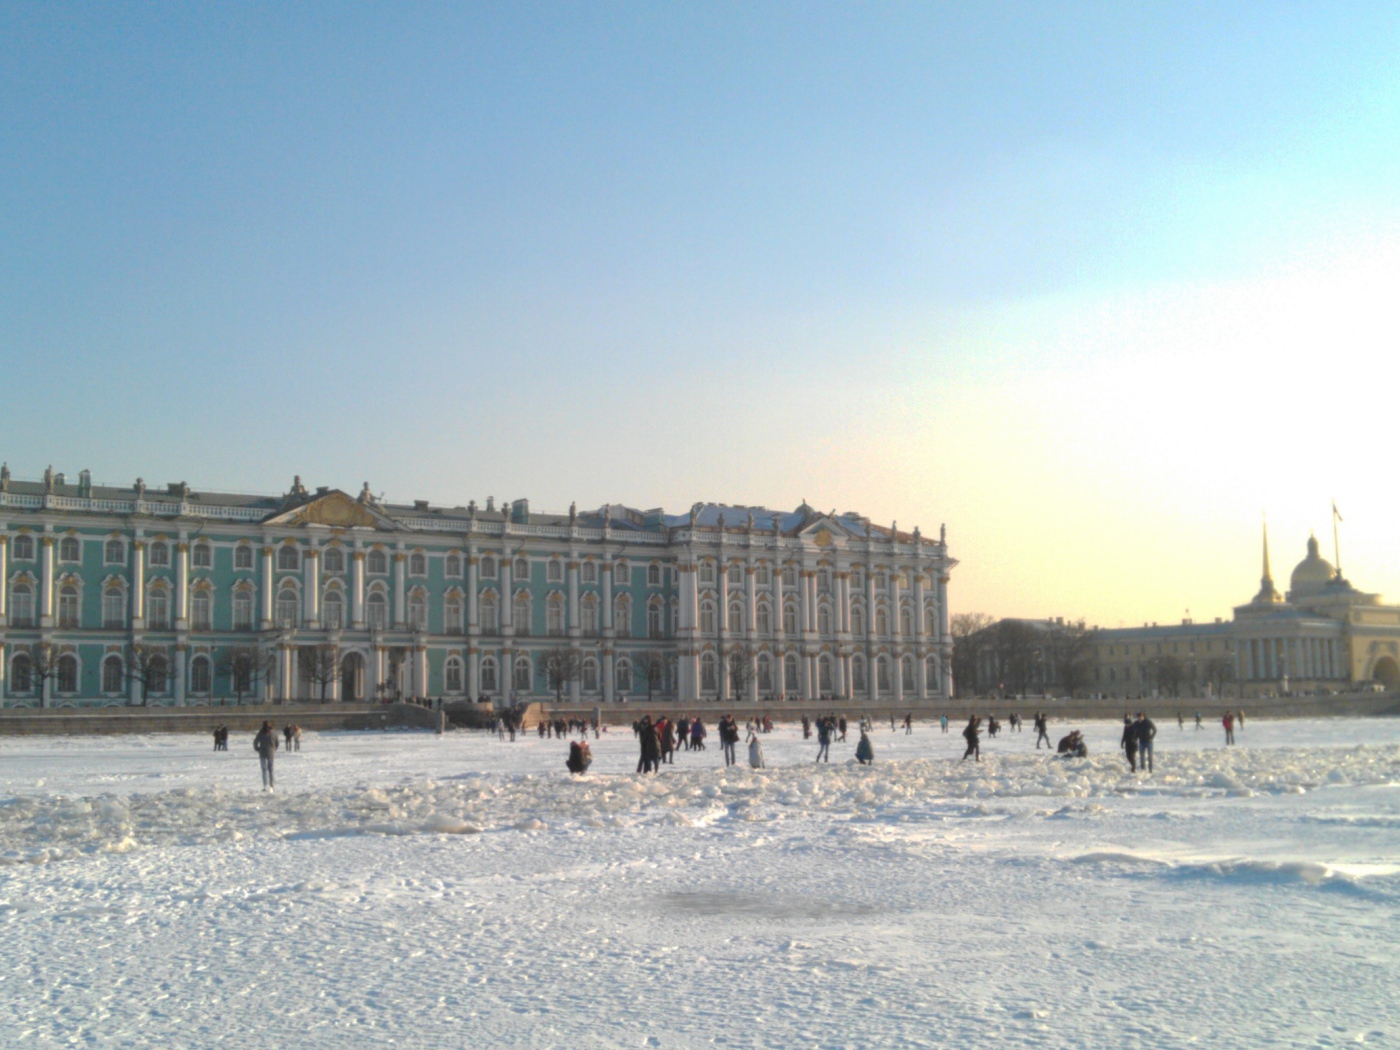 Snow in St. Petersburg around Hermitage